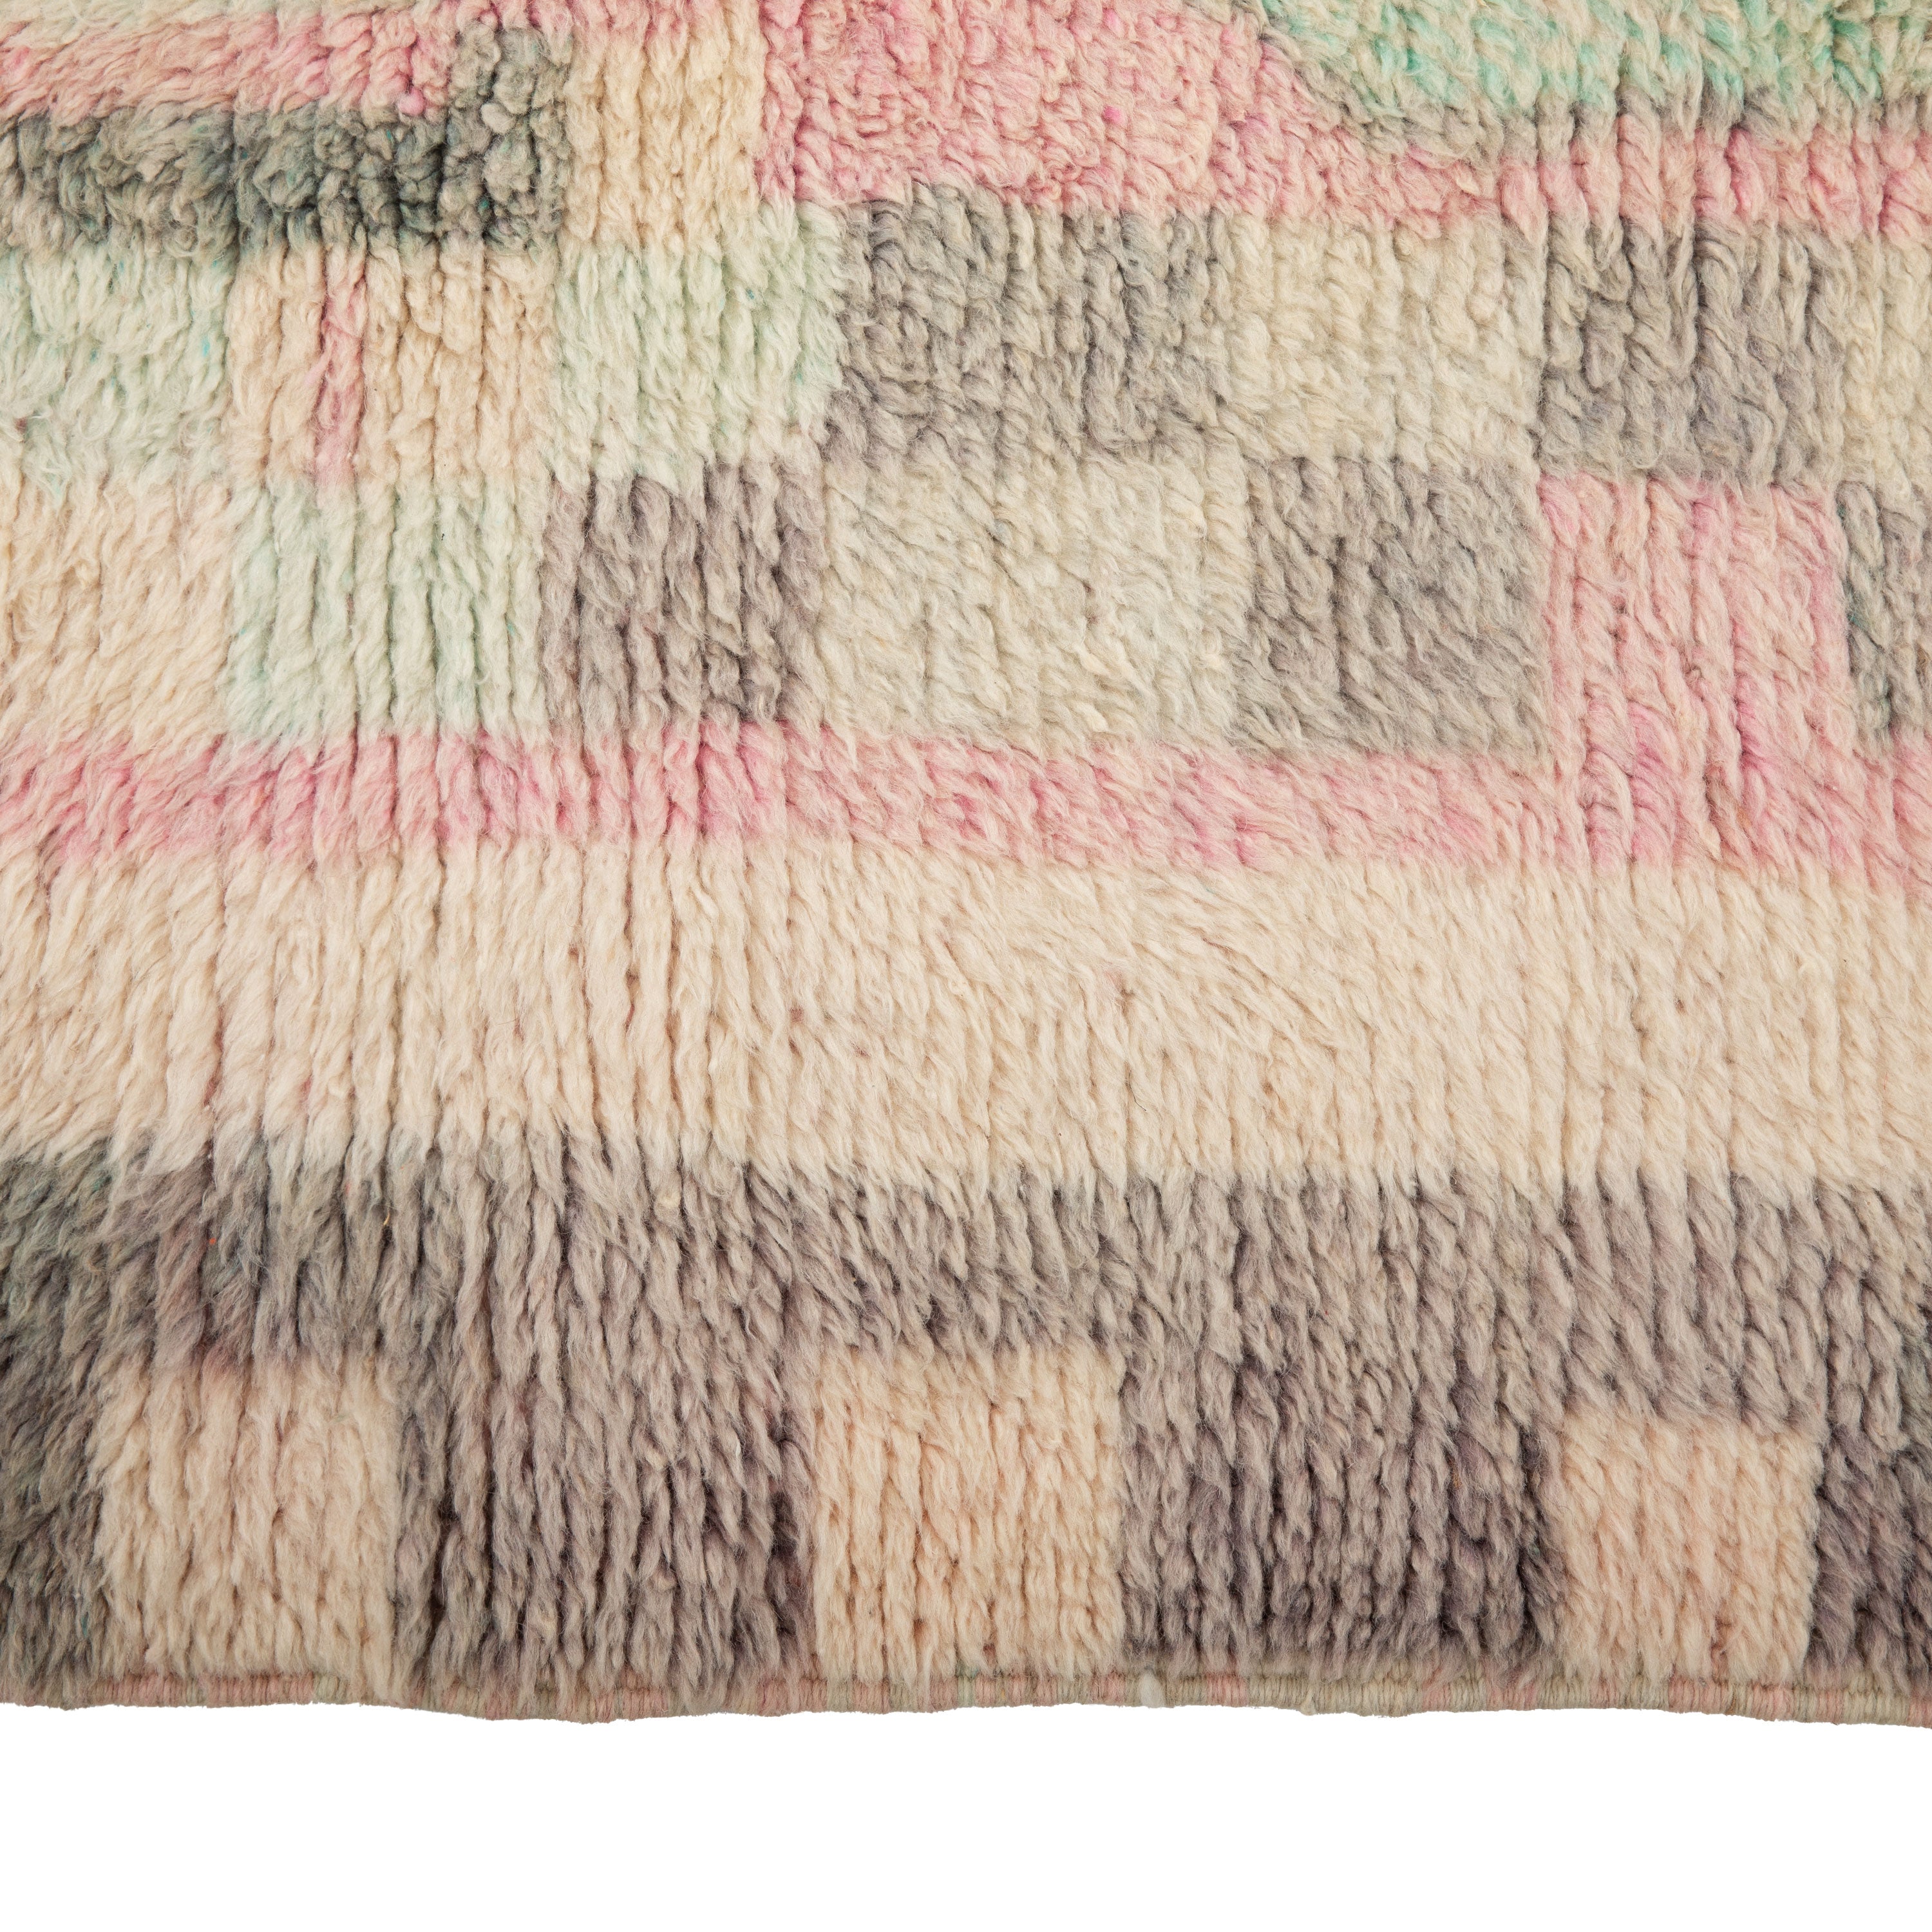 Multicolored Moroccan Berbere Wool Rug  - 5'3" x 6'9"